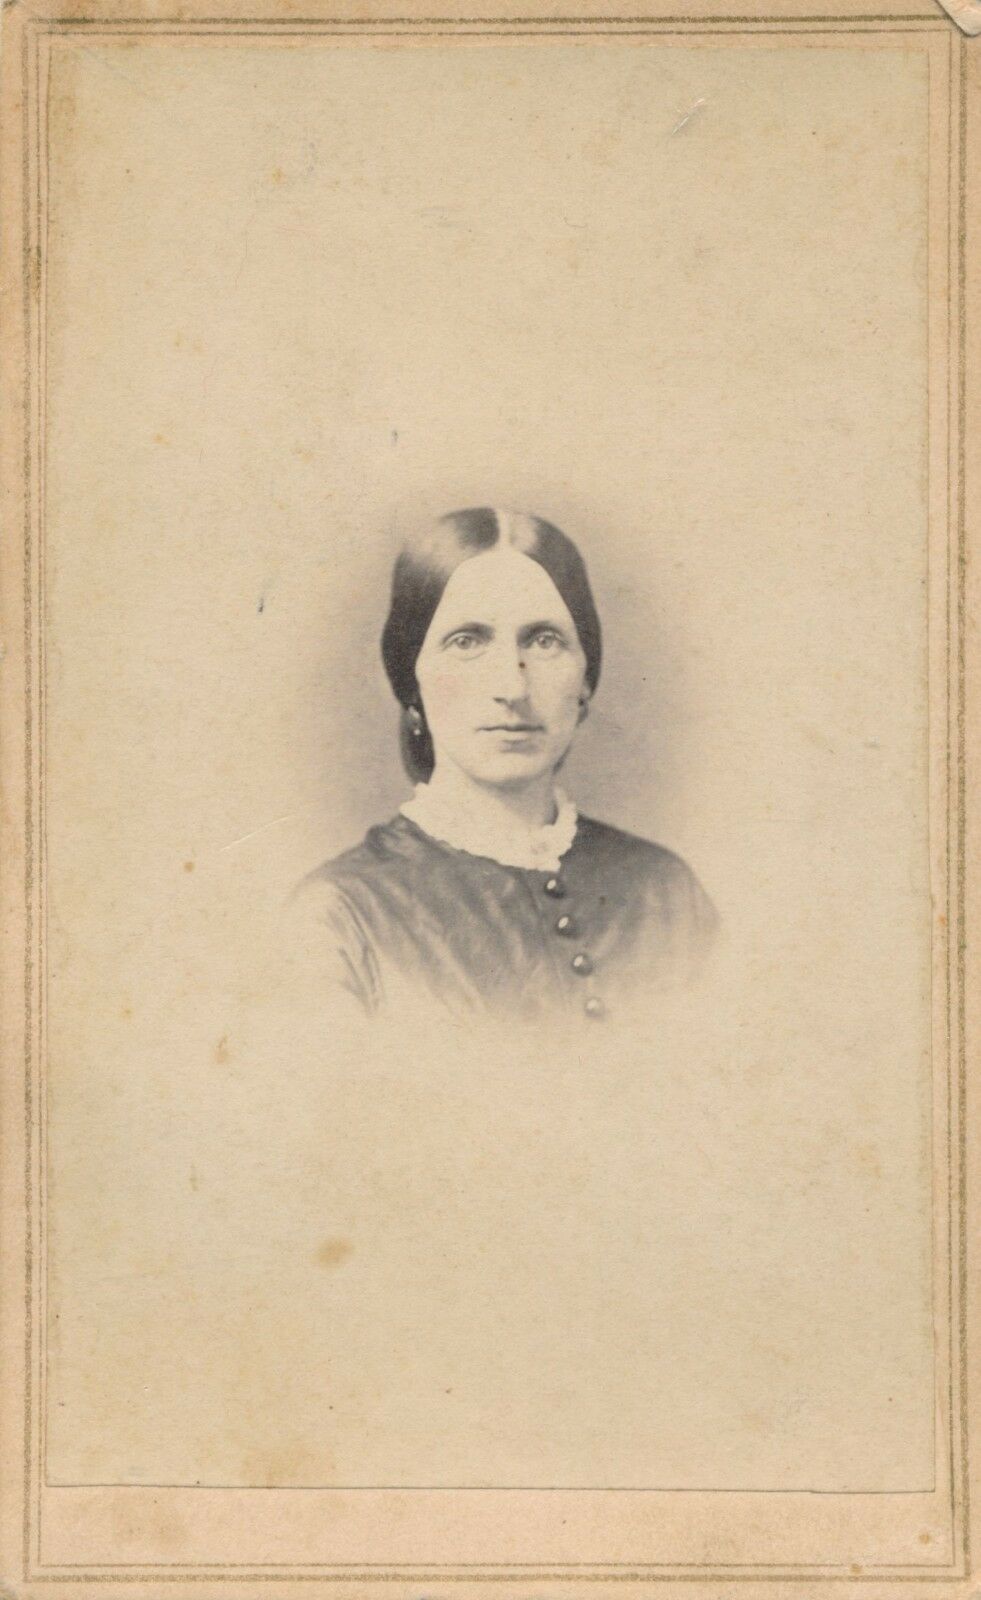 1865 Cdv Woman With Direct Gaze, 3 Ct. Green Civil War Revenue Stamp Photo